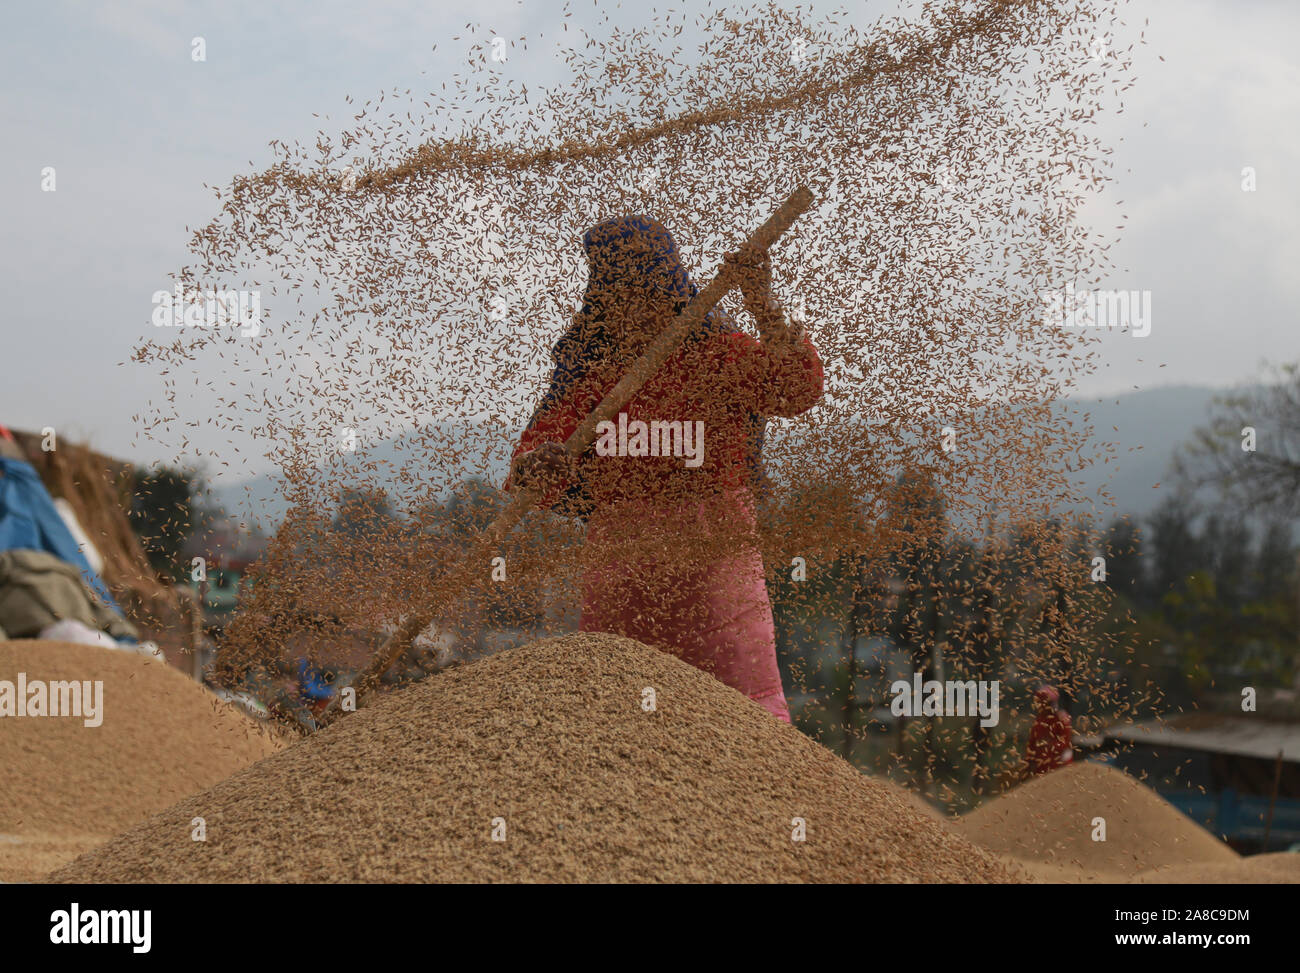 Kathmandu, Nepal. Nov 6th, 2019. Lokale Landwirte worfeln Reis nach der Ernte in Bhaktapur, Nepal. Sarita Khadka/Alamy leben Nachrichten Stockfoto